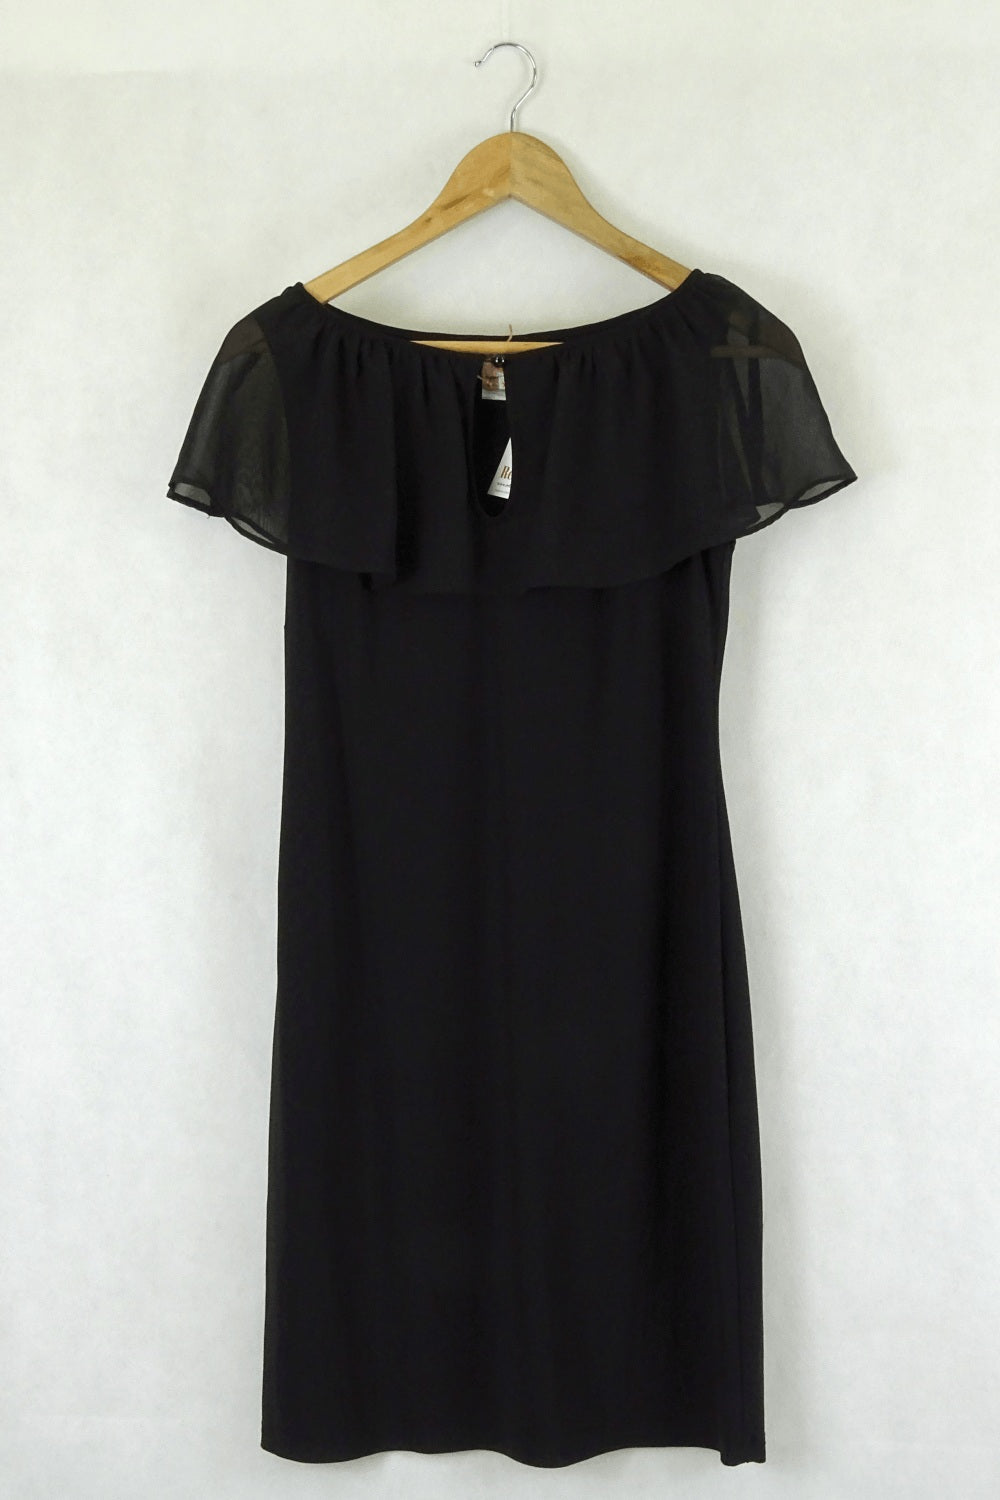 Leona Edmiston Black Dress Xs